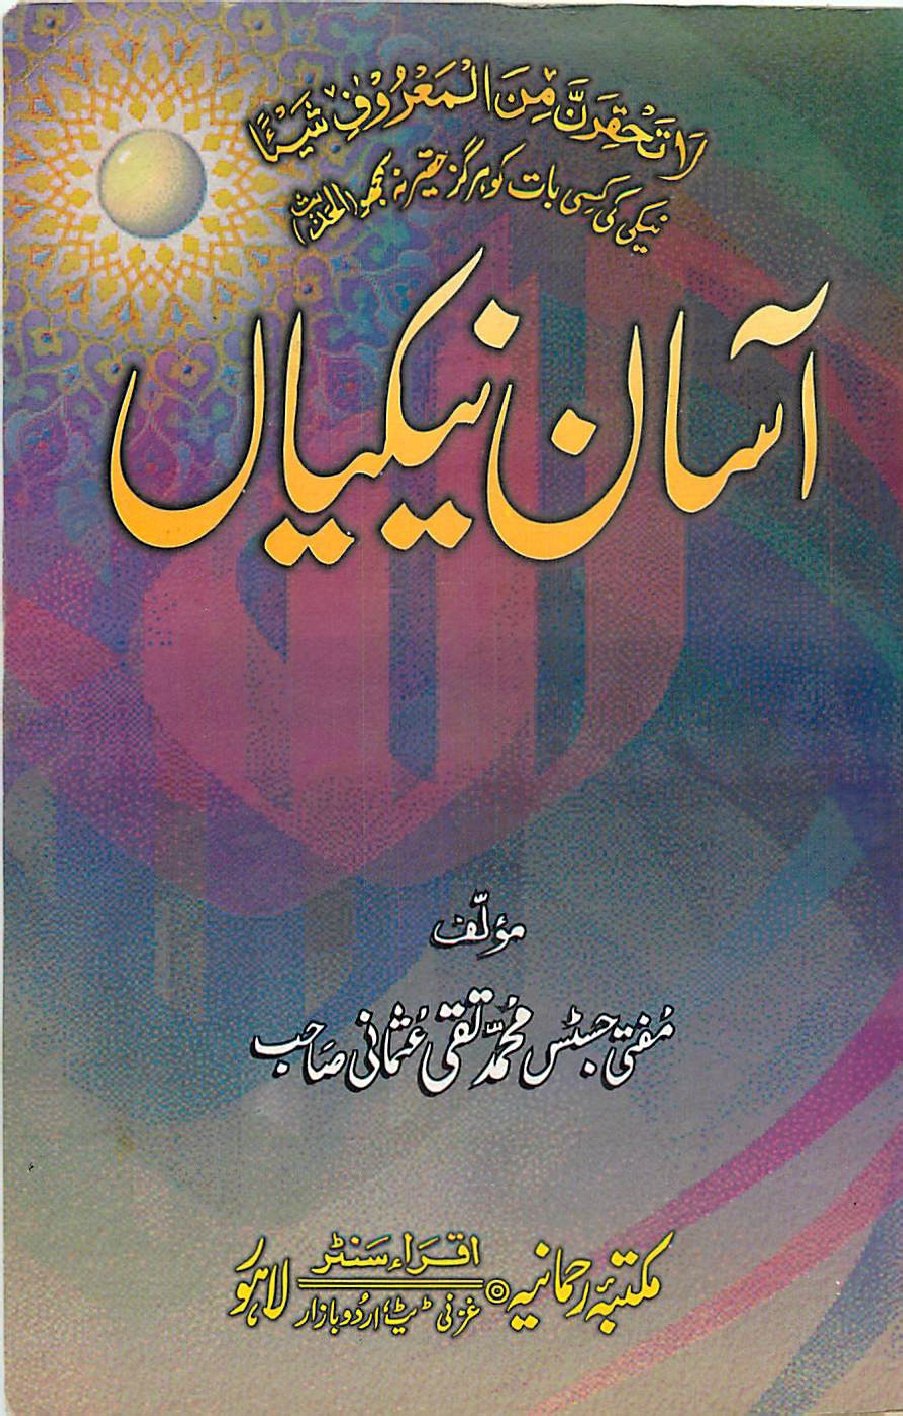 158af3eab6b 1 - اردو میں لکھی گئی مشہور اسلامی کتابیں